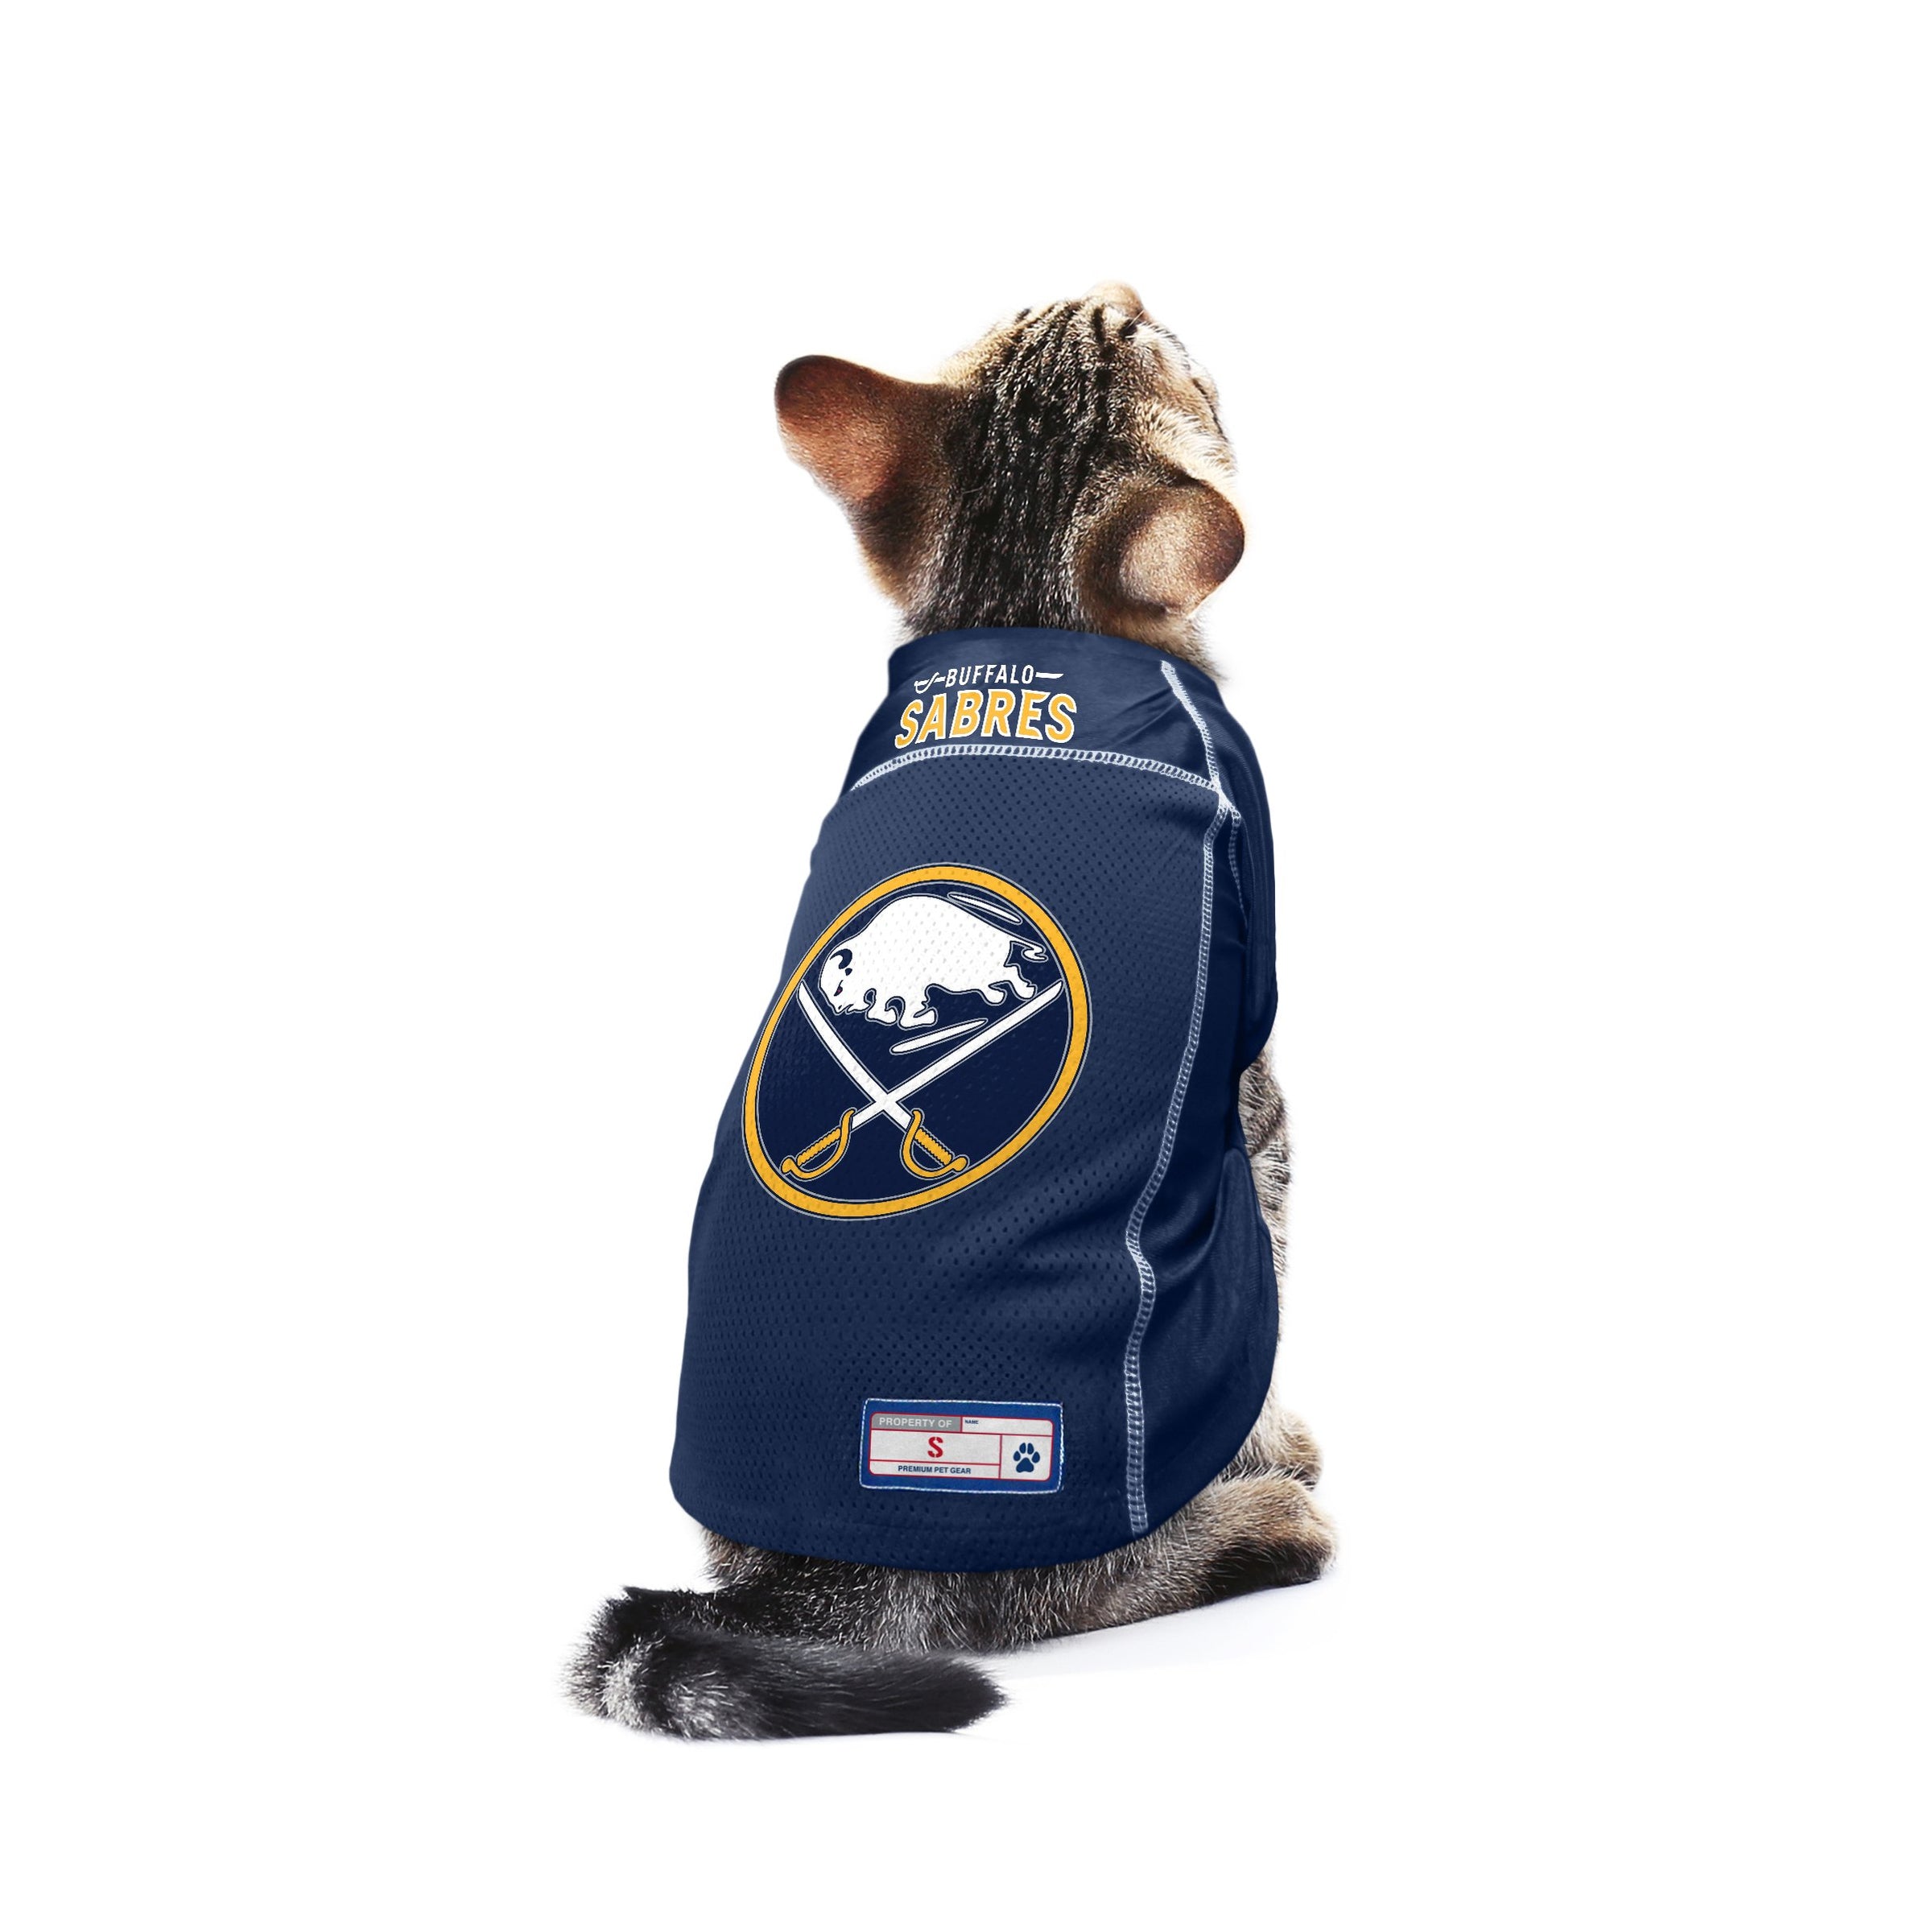 Buffalo Sabres Jerseys & Apparel: Shop Gear, Merchandise & More!